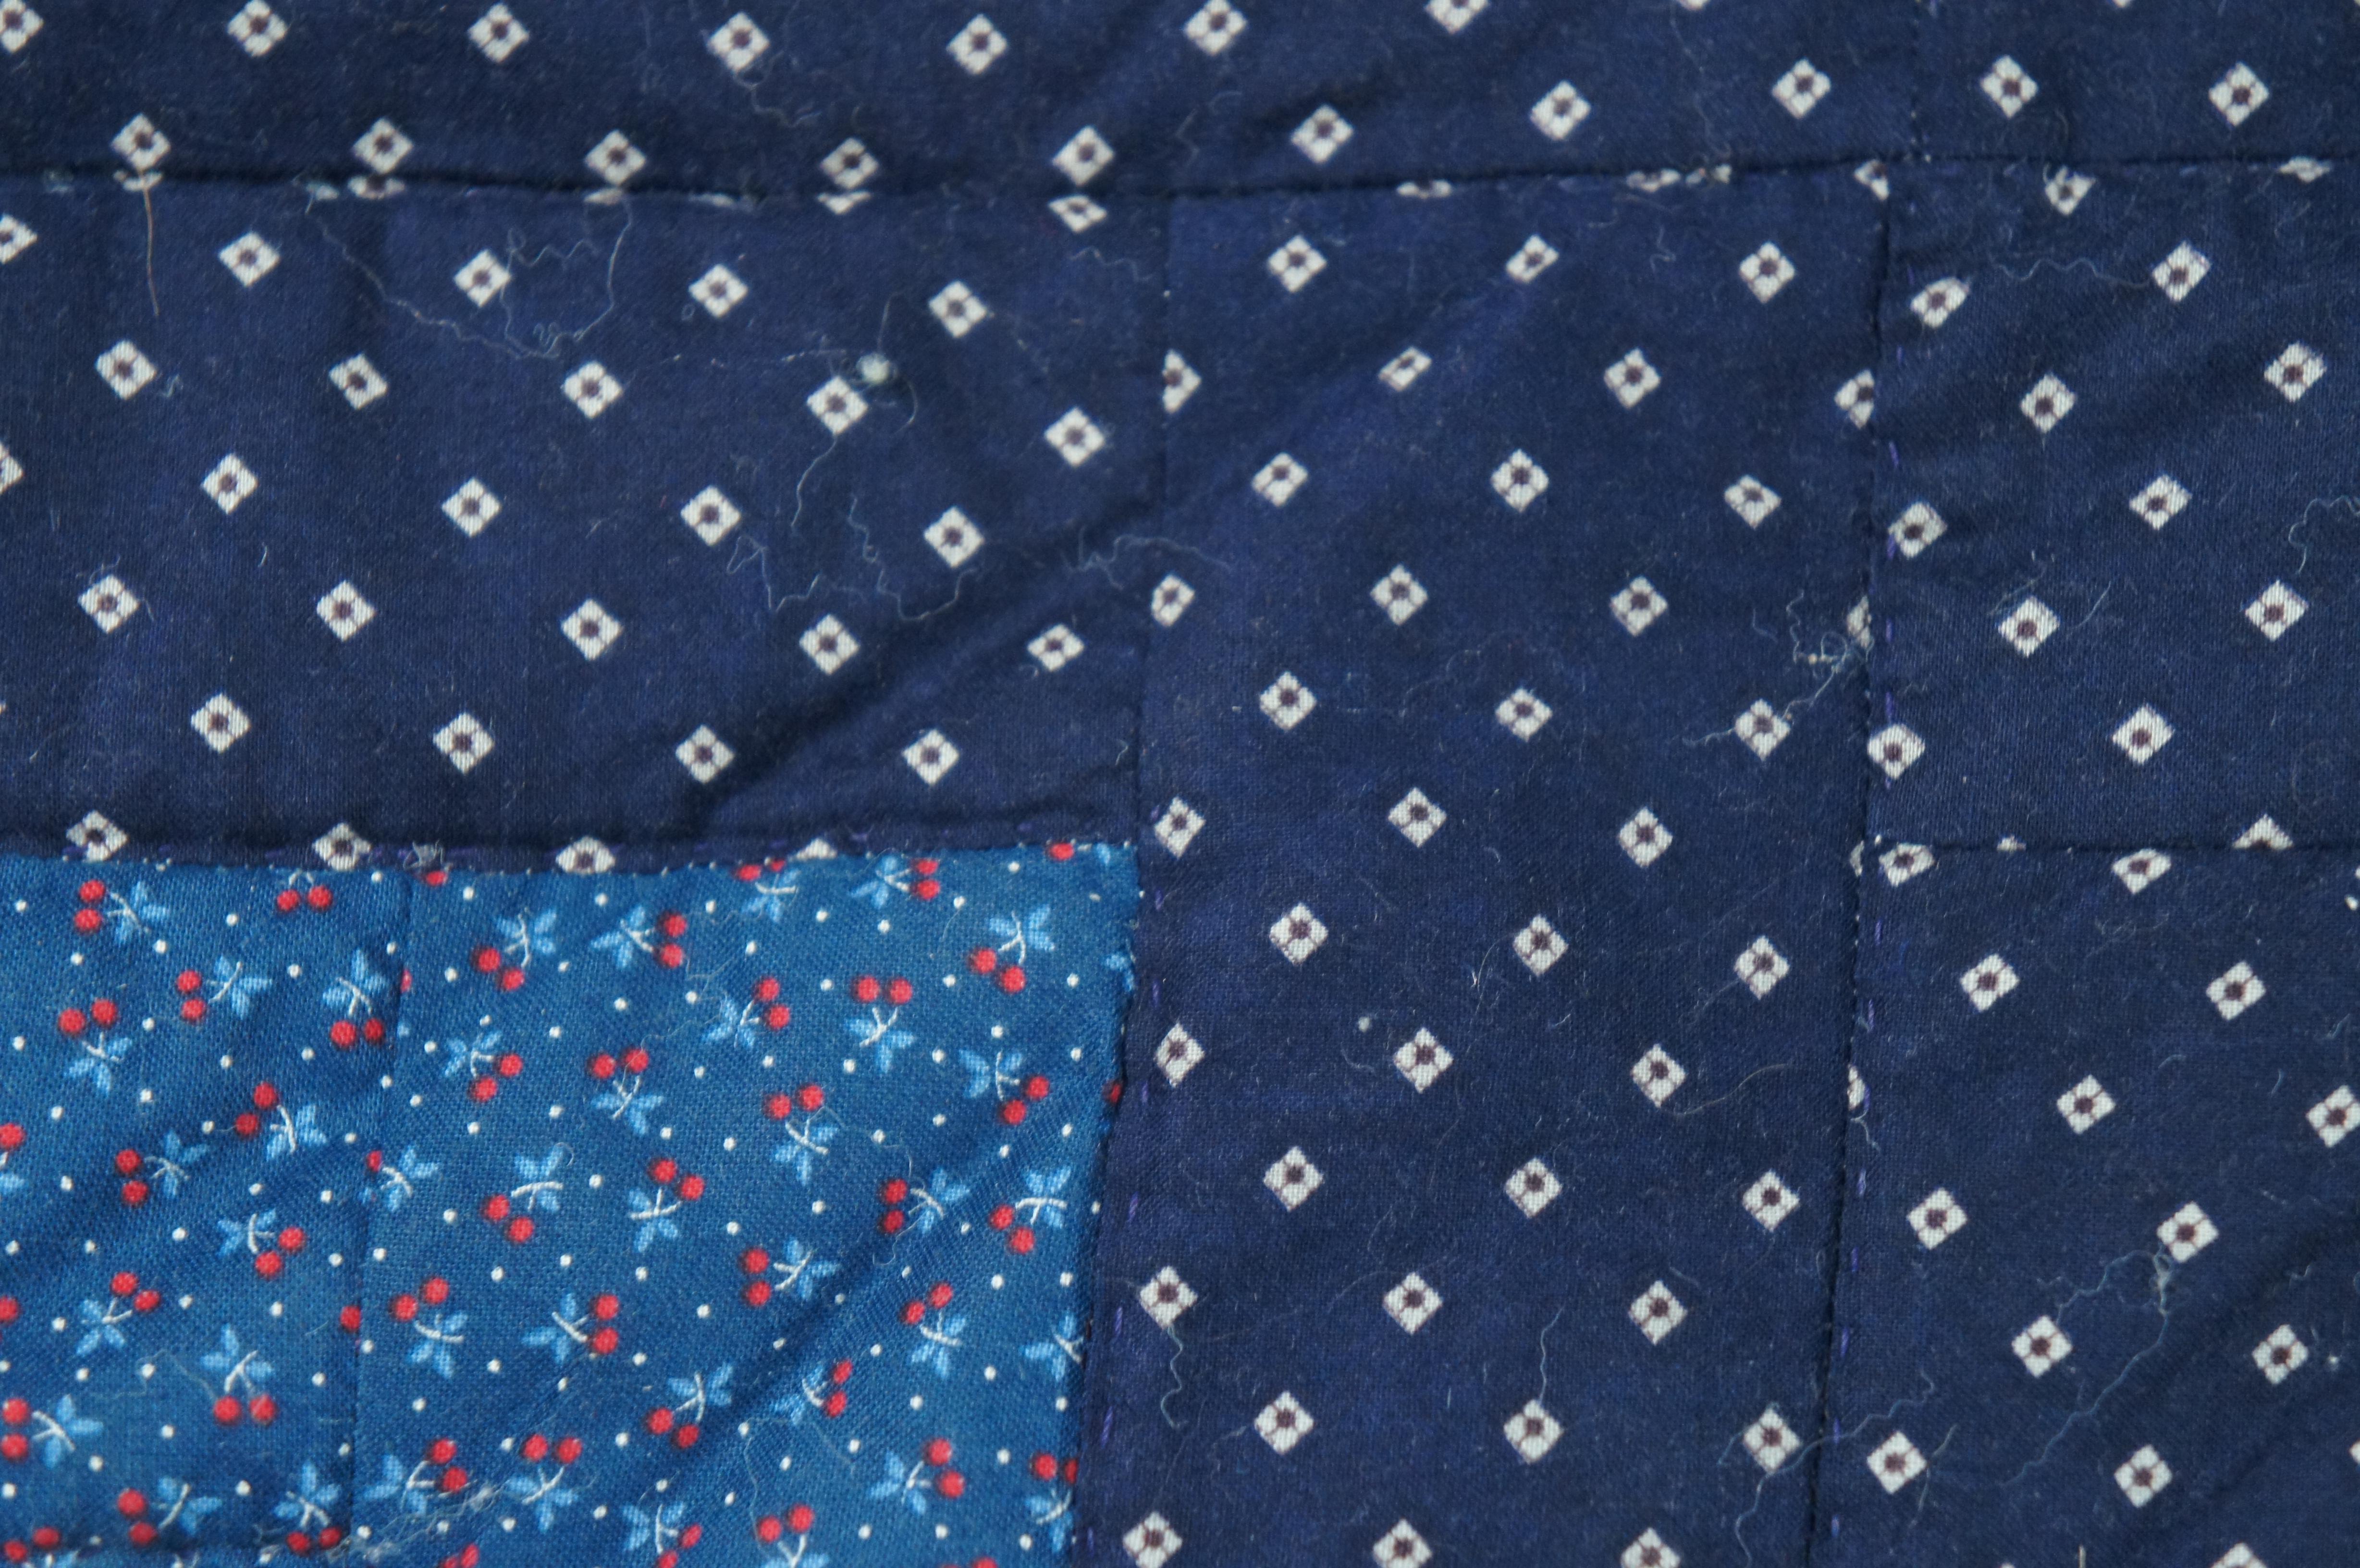 Coton Vintage Log Cabine Stitch by Stitch Geometric Floral Quilt Blanket Bedspread 87